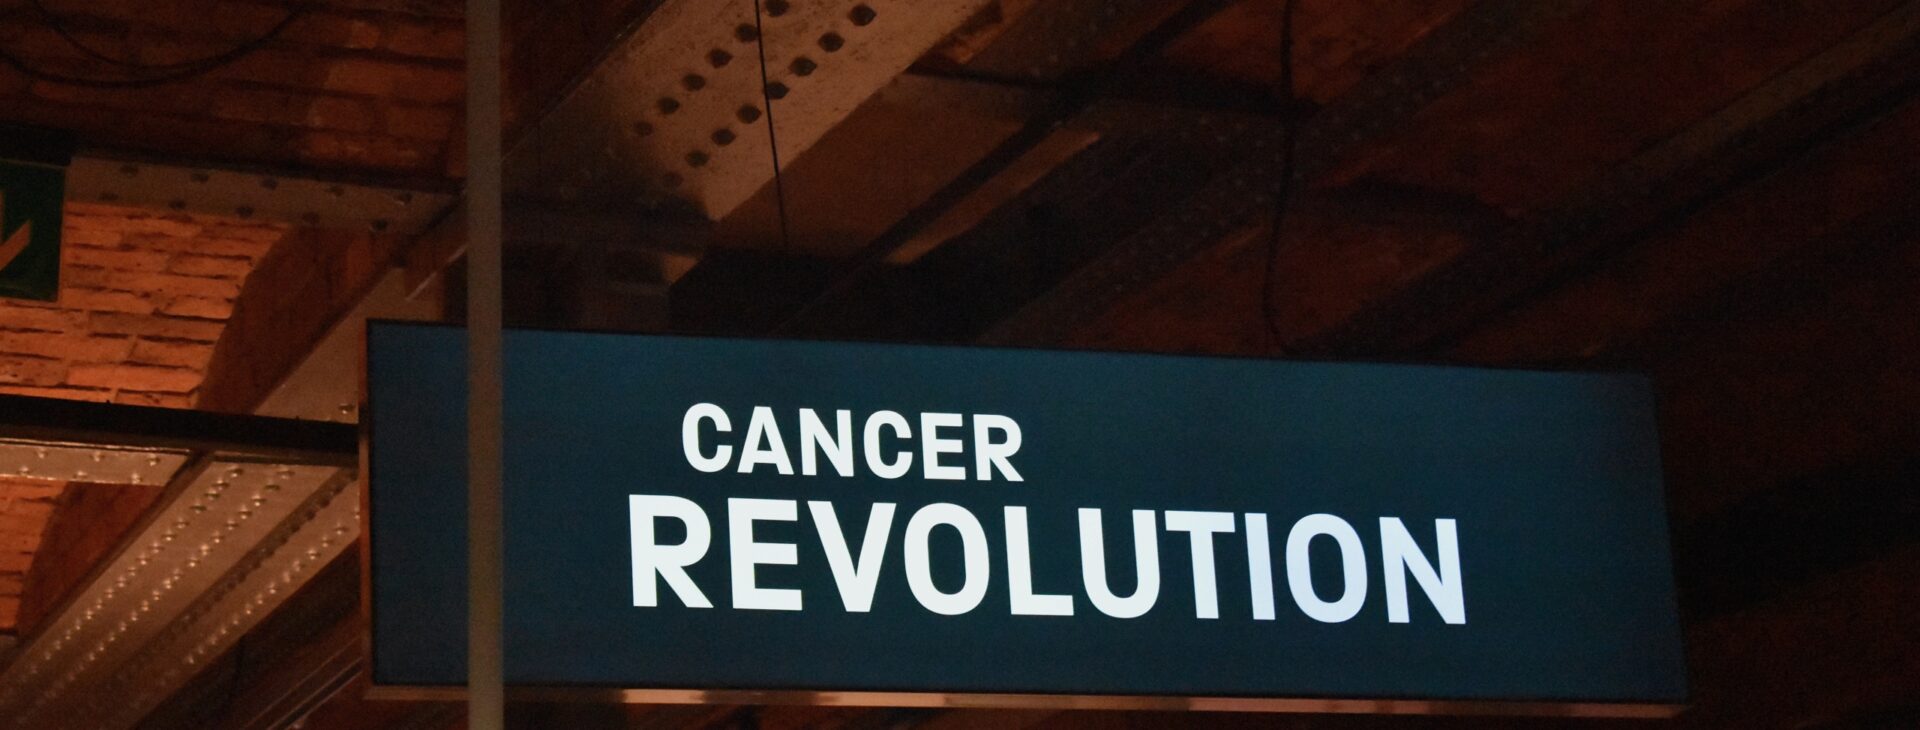 Cancer Revolution sign SIM